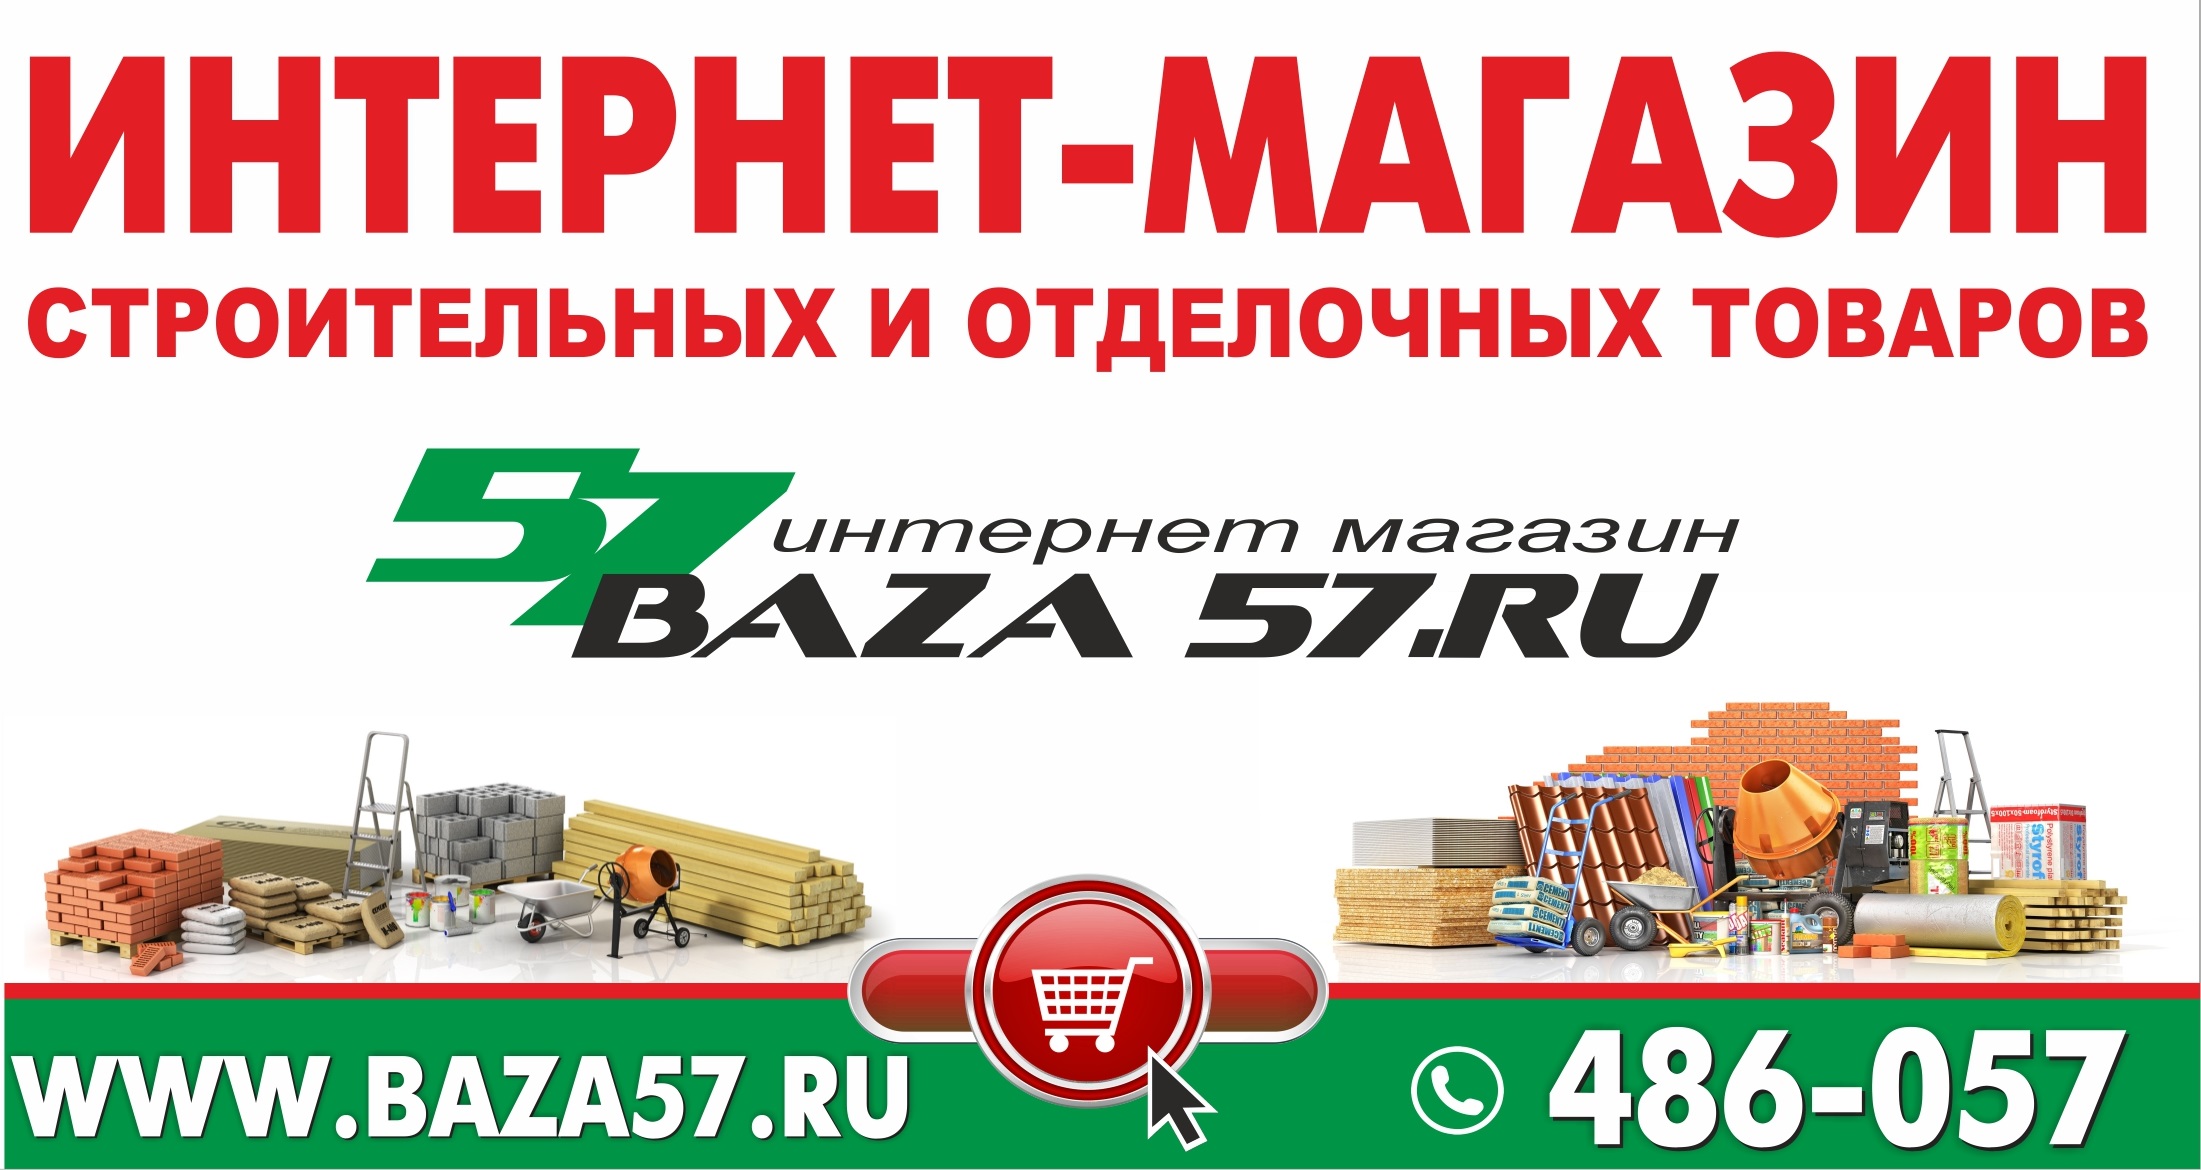 База57 Ru Интернет Магазин